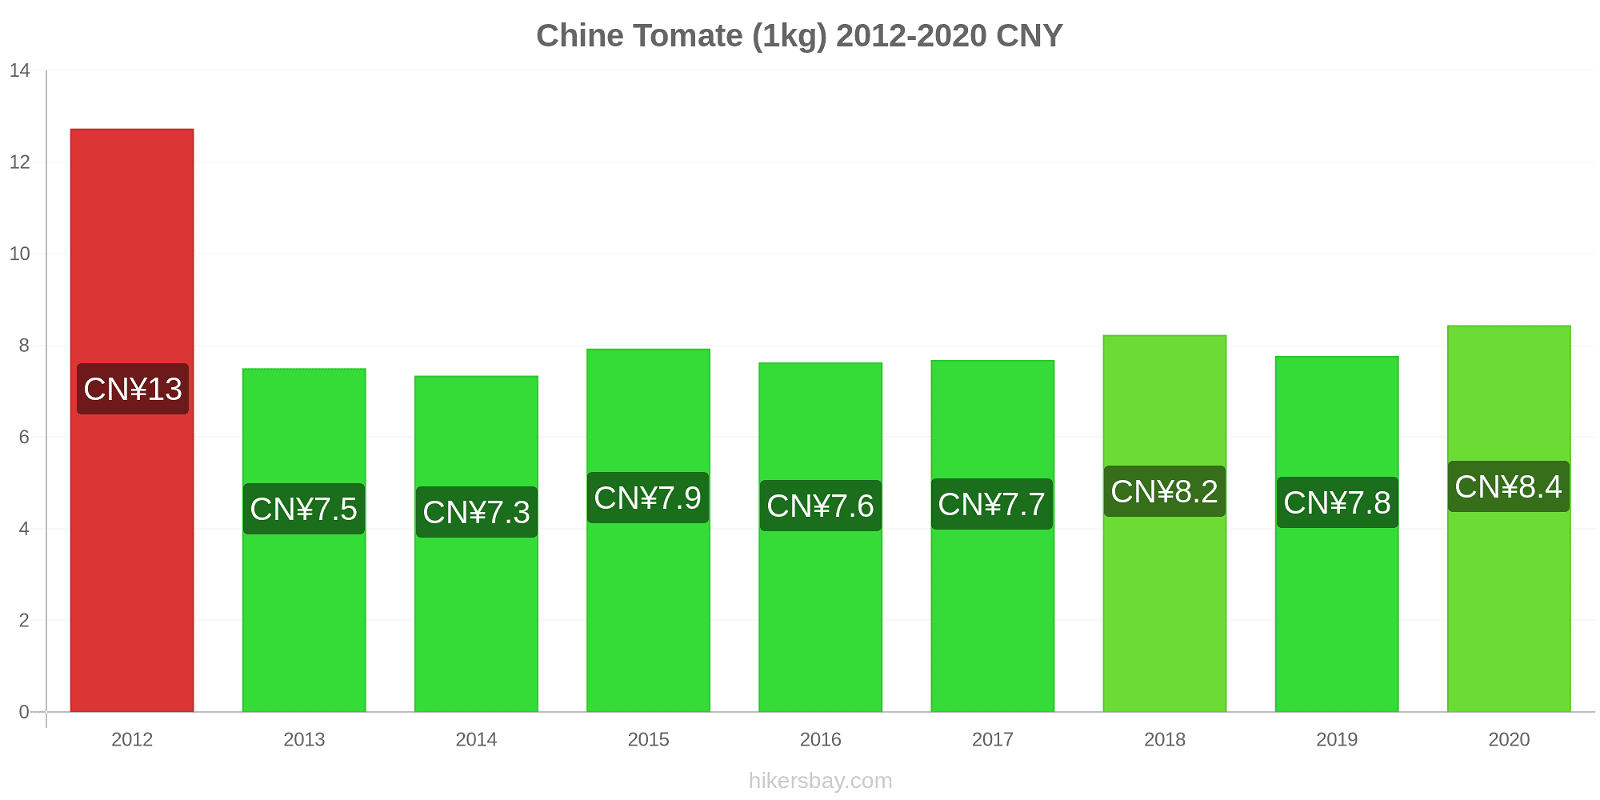 Chine changements de prix Tomate (1kg) hikersbay.com